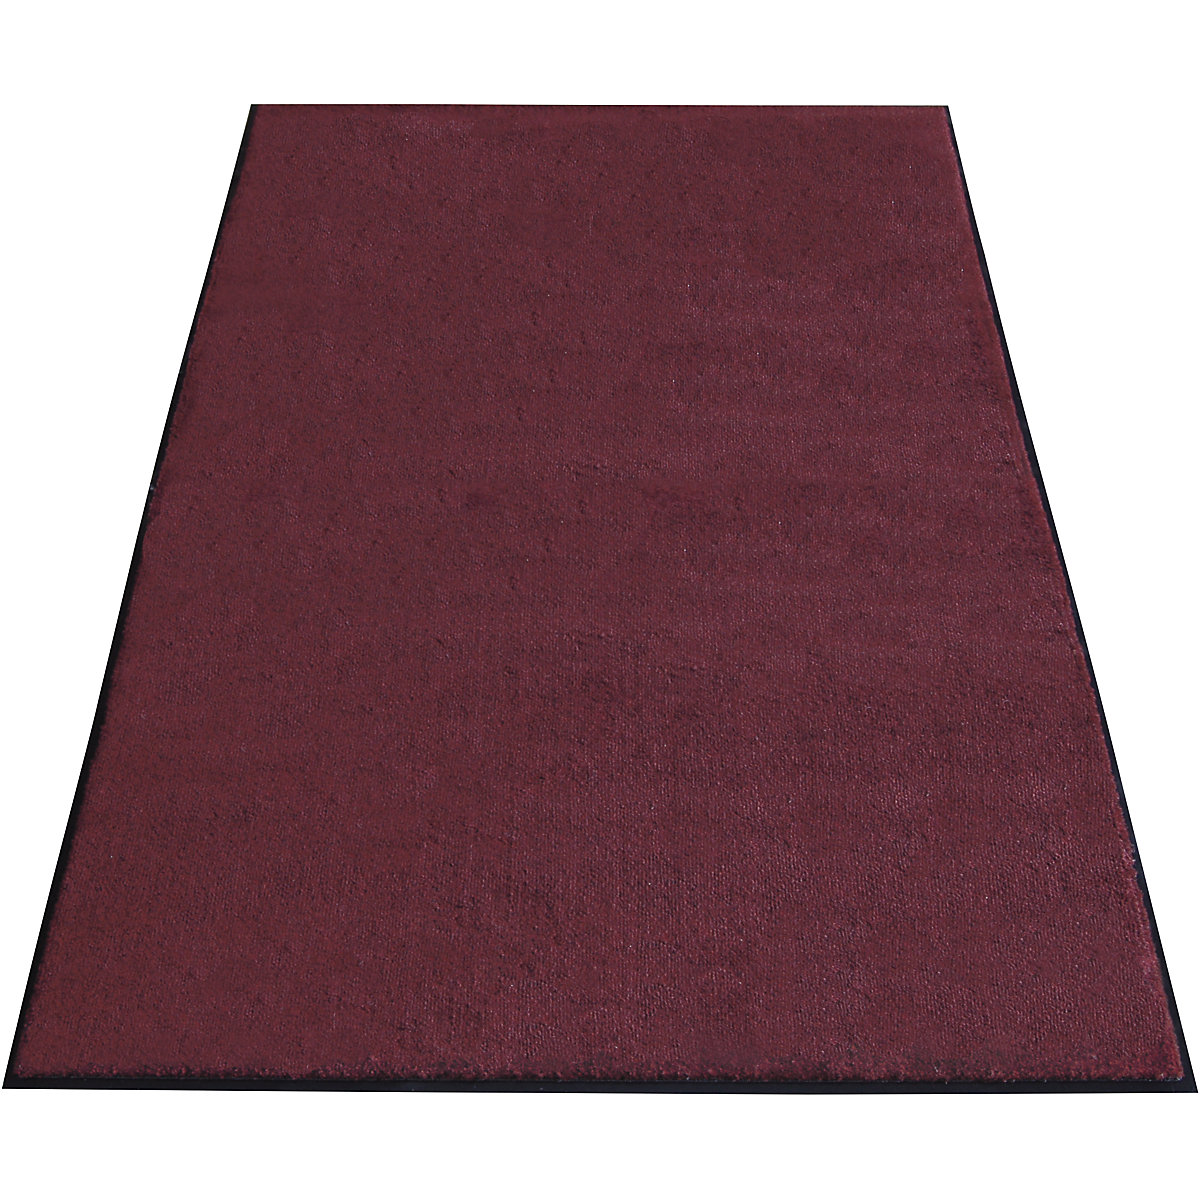 EAZYCARE AQUA entrance matting, LxW 2400 x 1200 mm, red